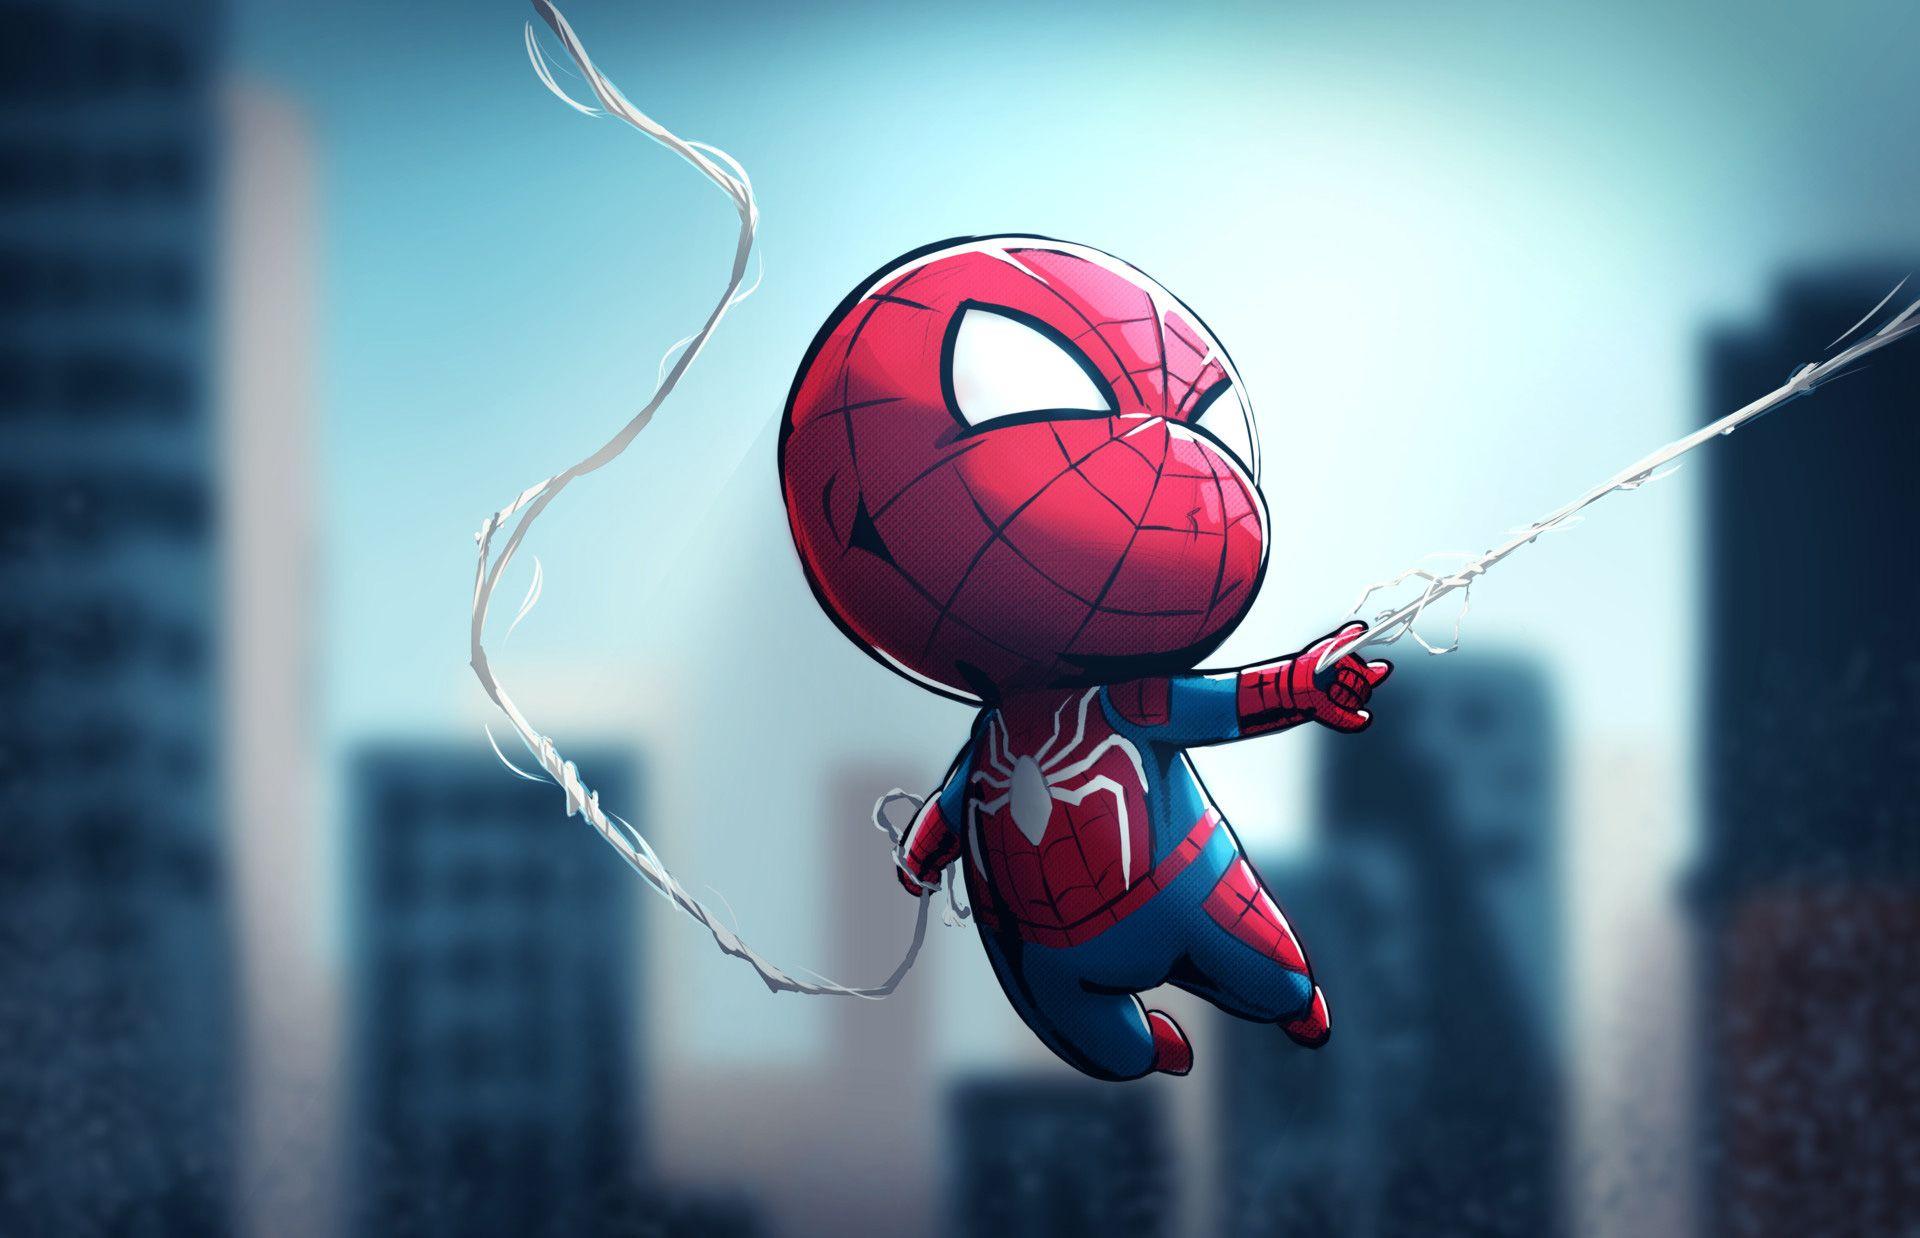 Cute Spiderman Wallpapers - Top Free